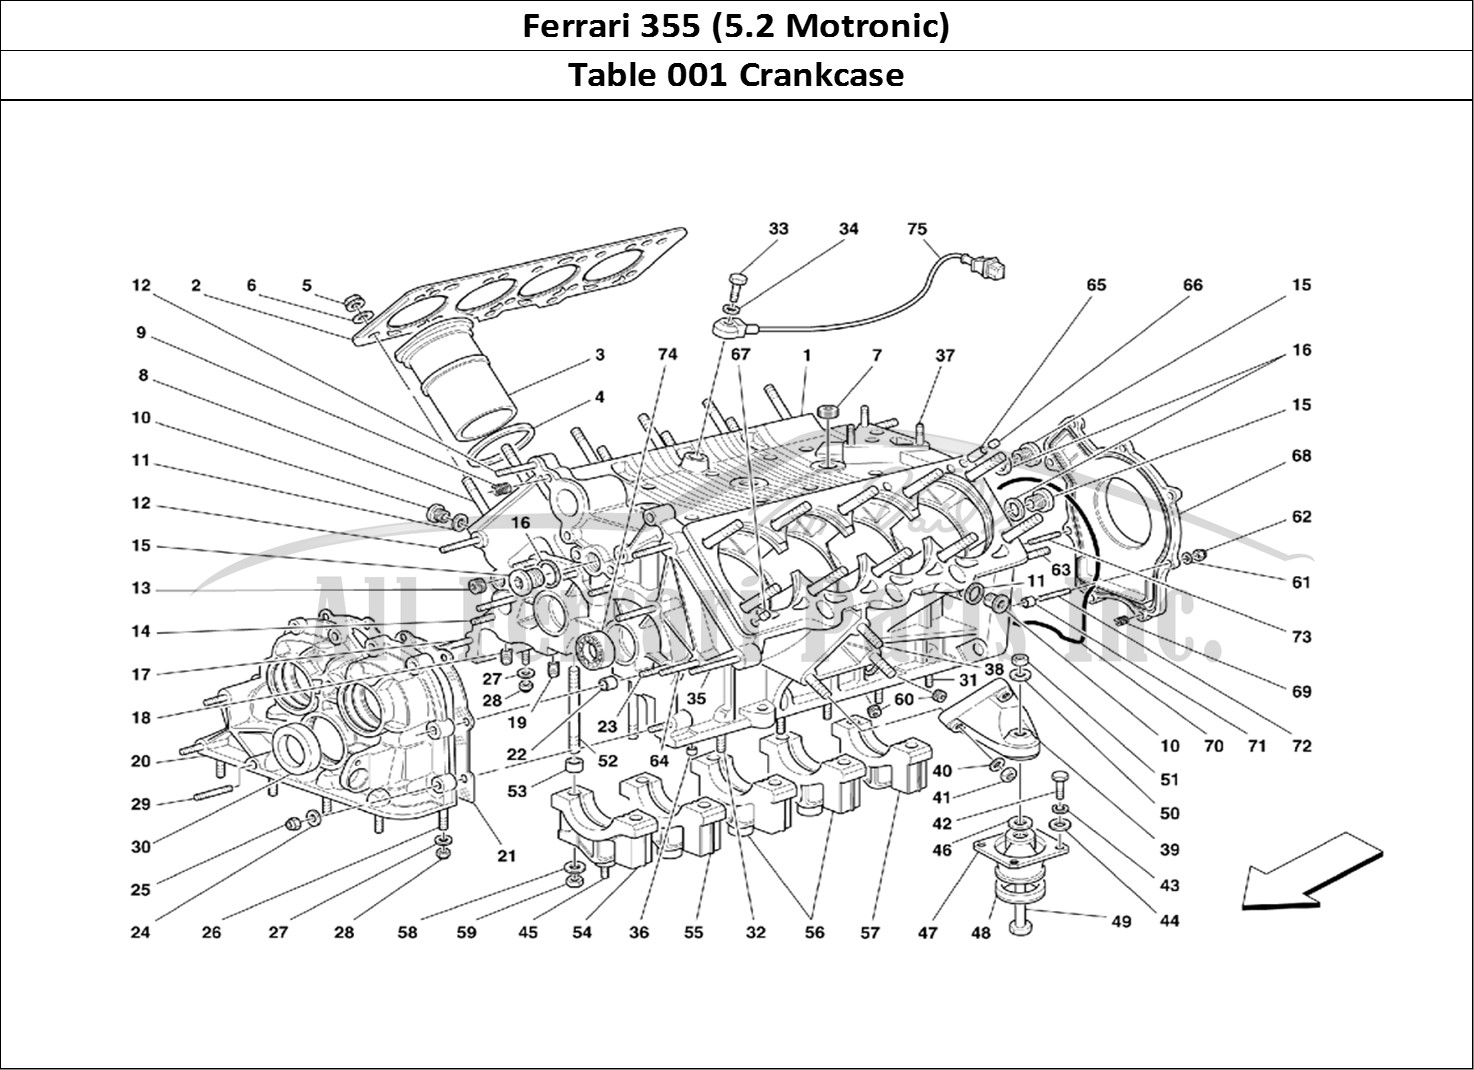 Ferrari Parts Ferrari 355 (5.2 Motronic) Page 001 Crankcase